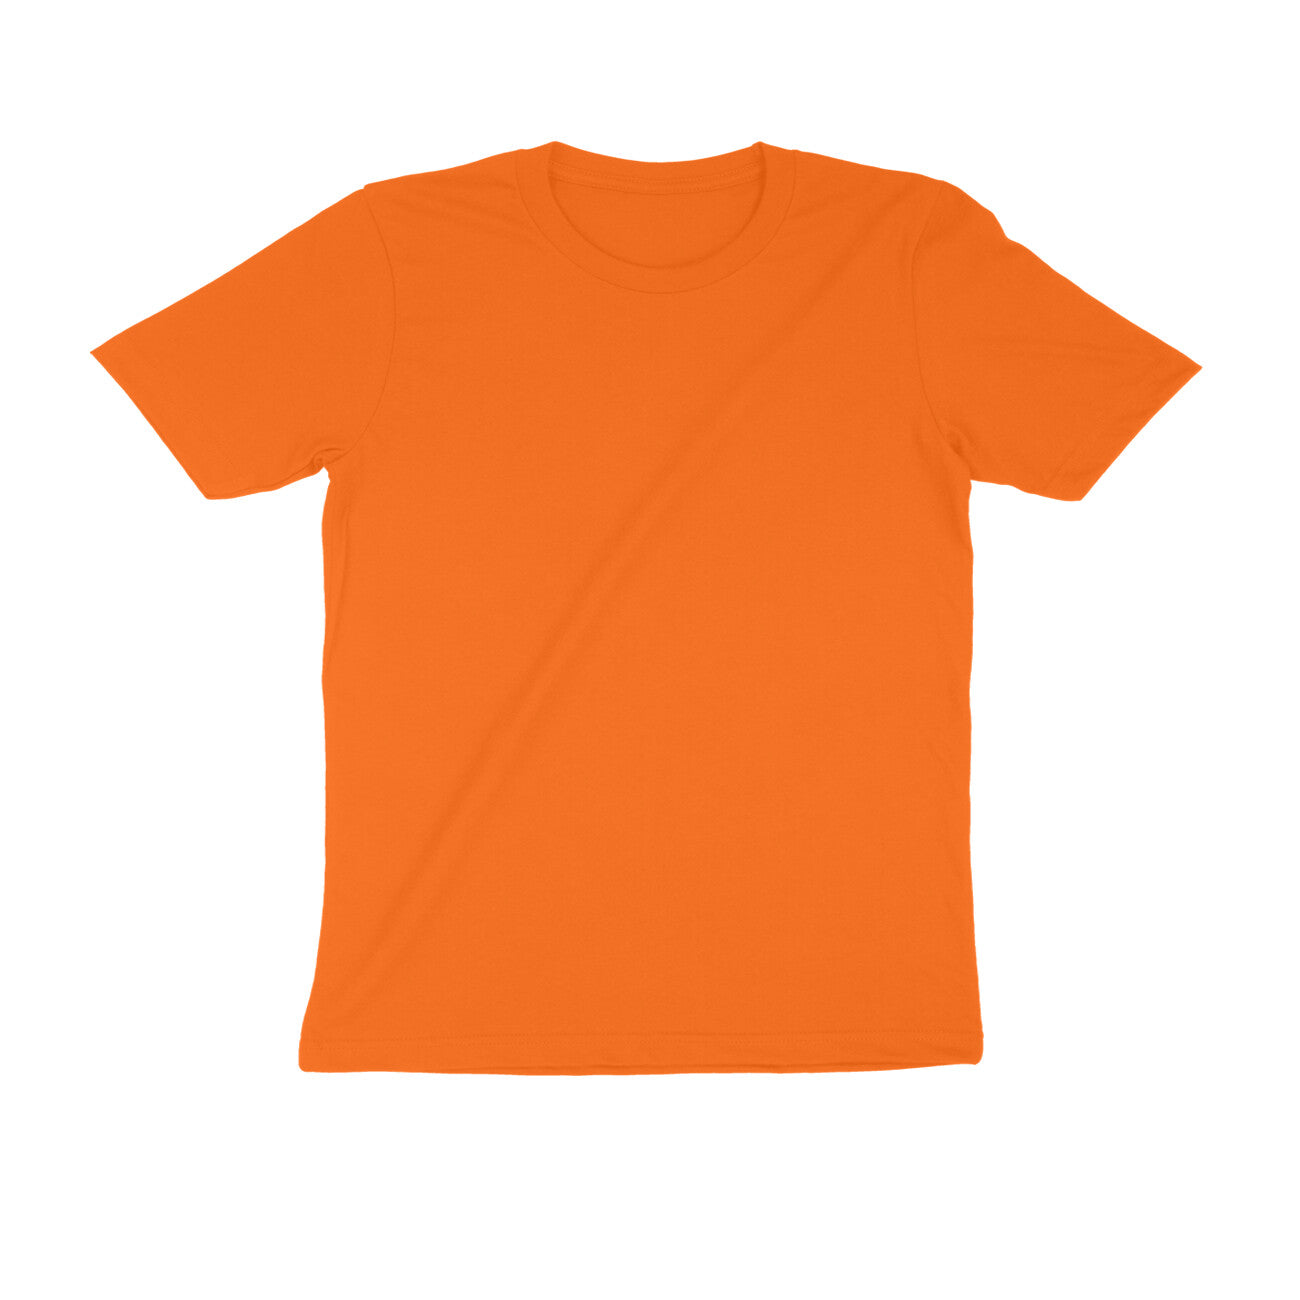 j'adore hardcore orange t shirt